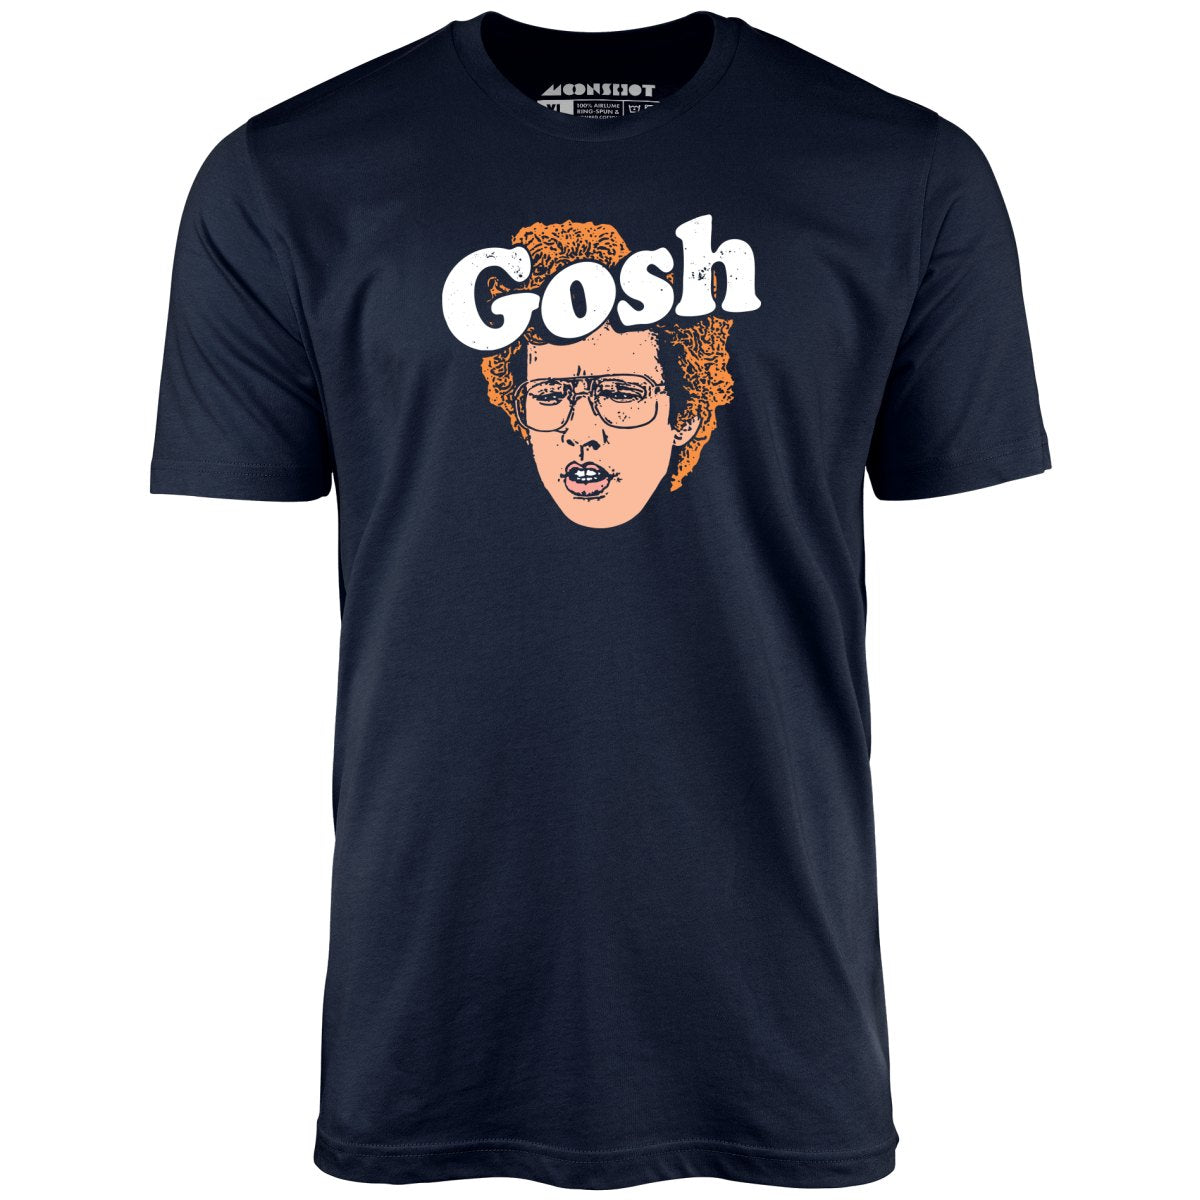 Gosh - Unisex T-Shirt